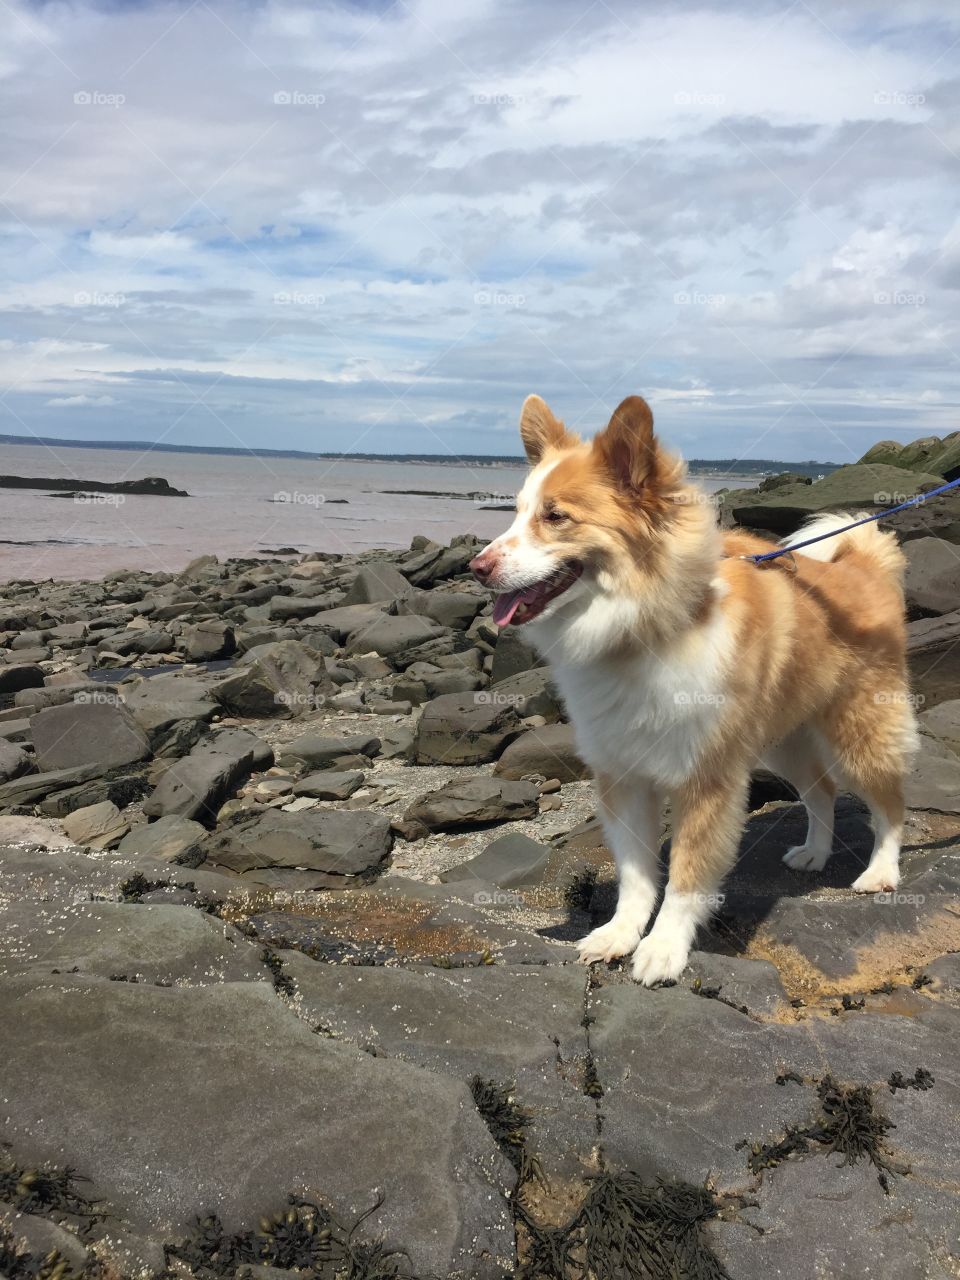 Dog exploring the beach